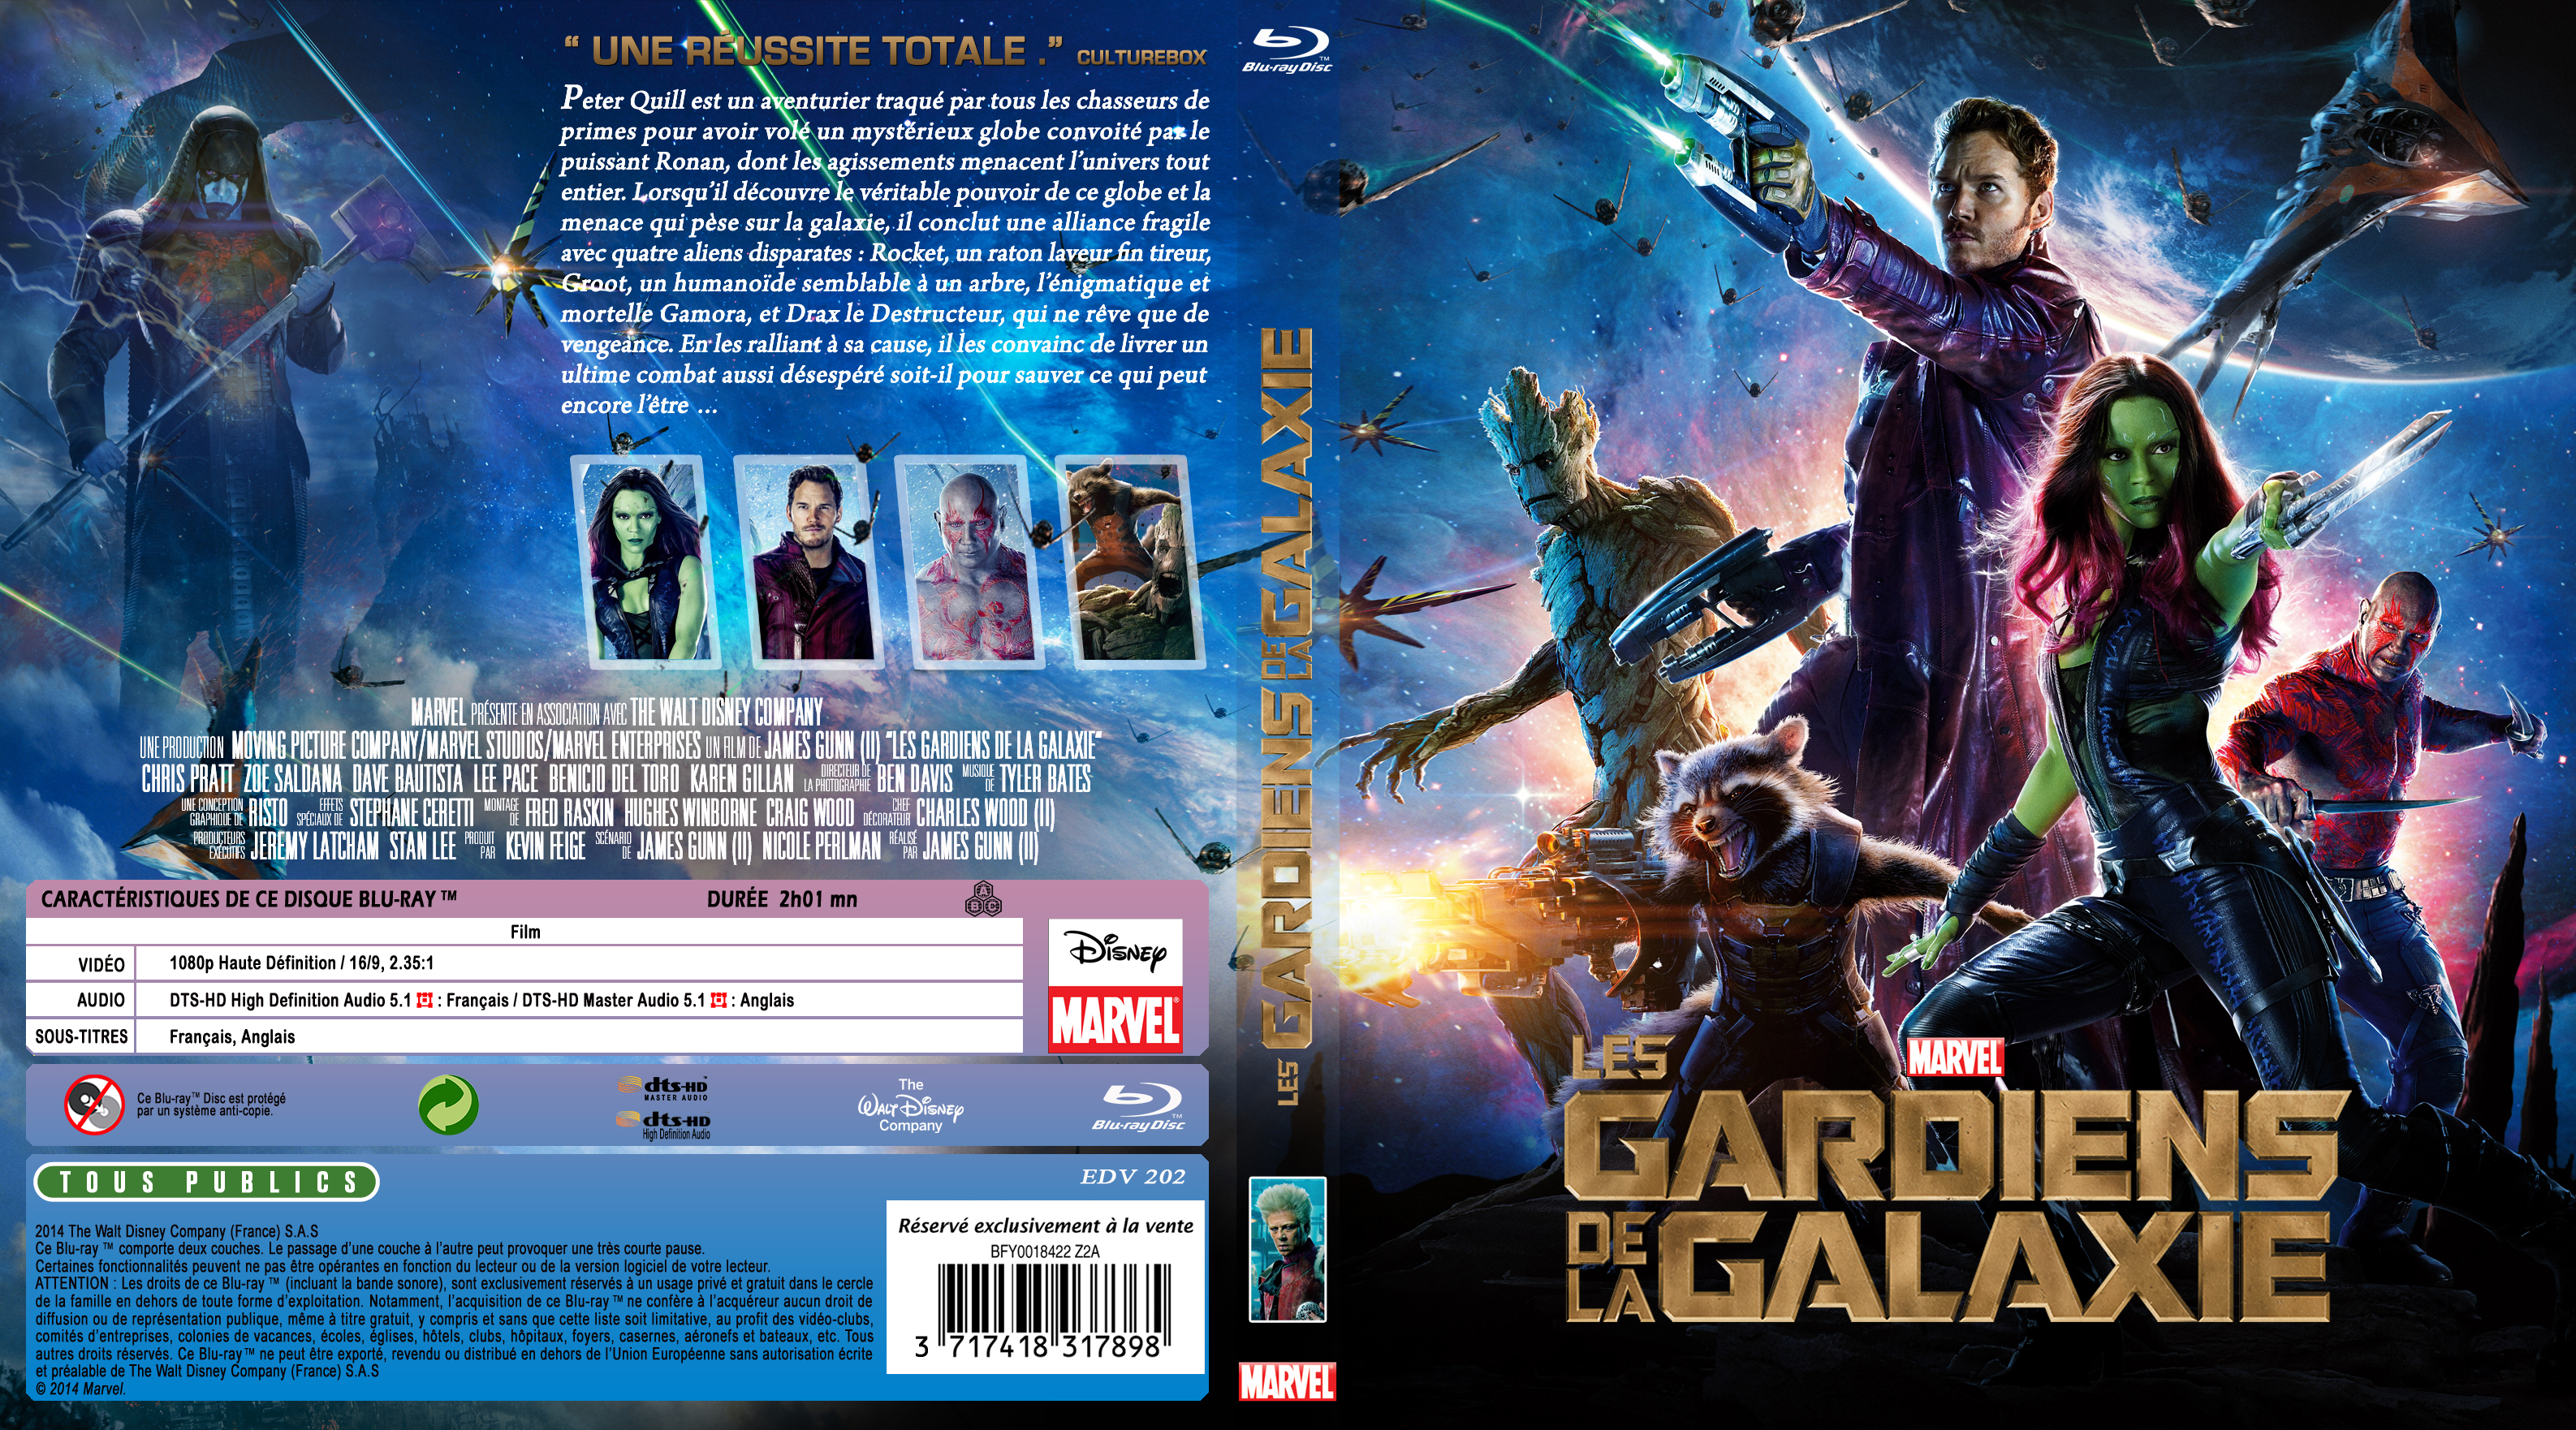 Jaquette DVD Les gardiens de la galaxie custom (BLU-RAY) v2